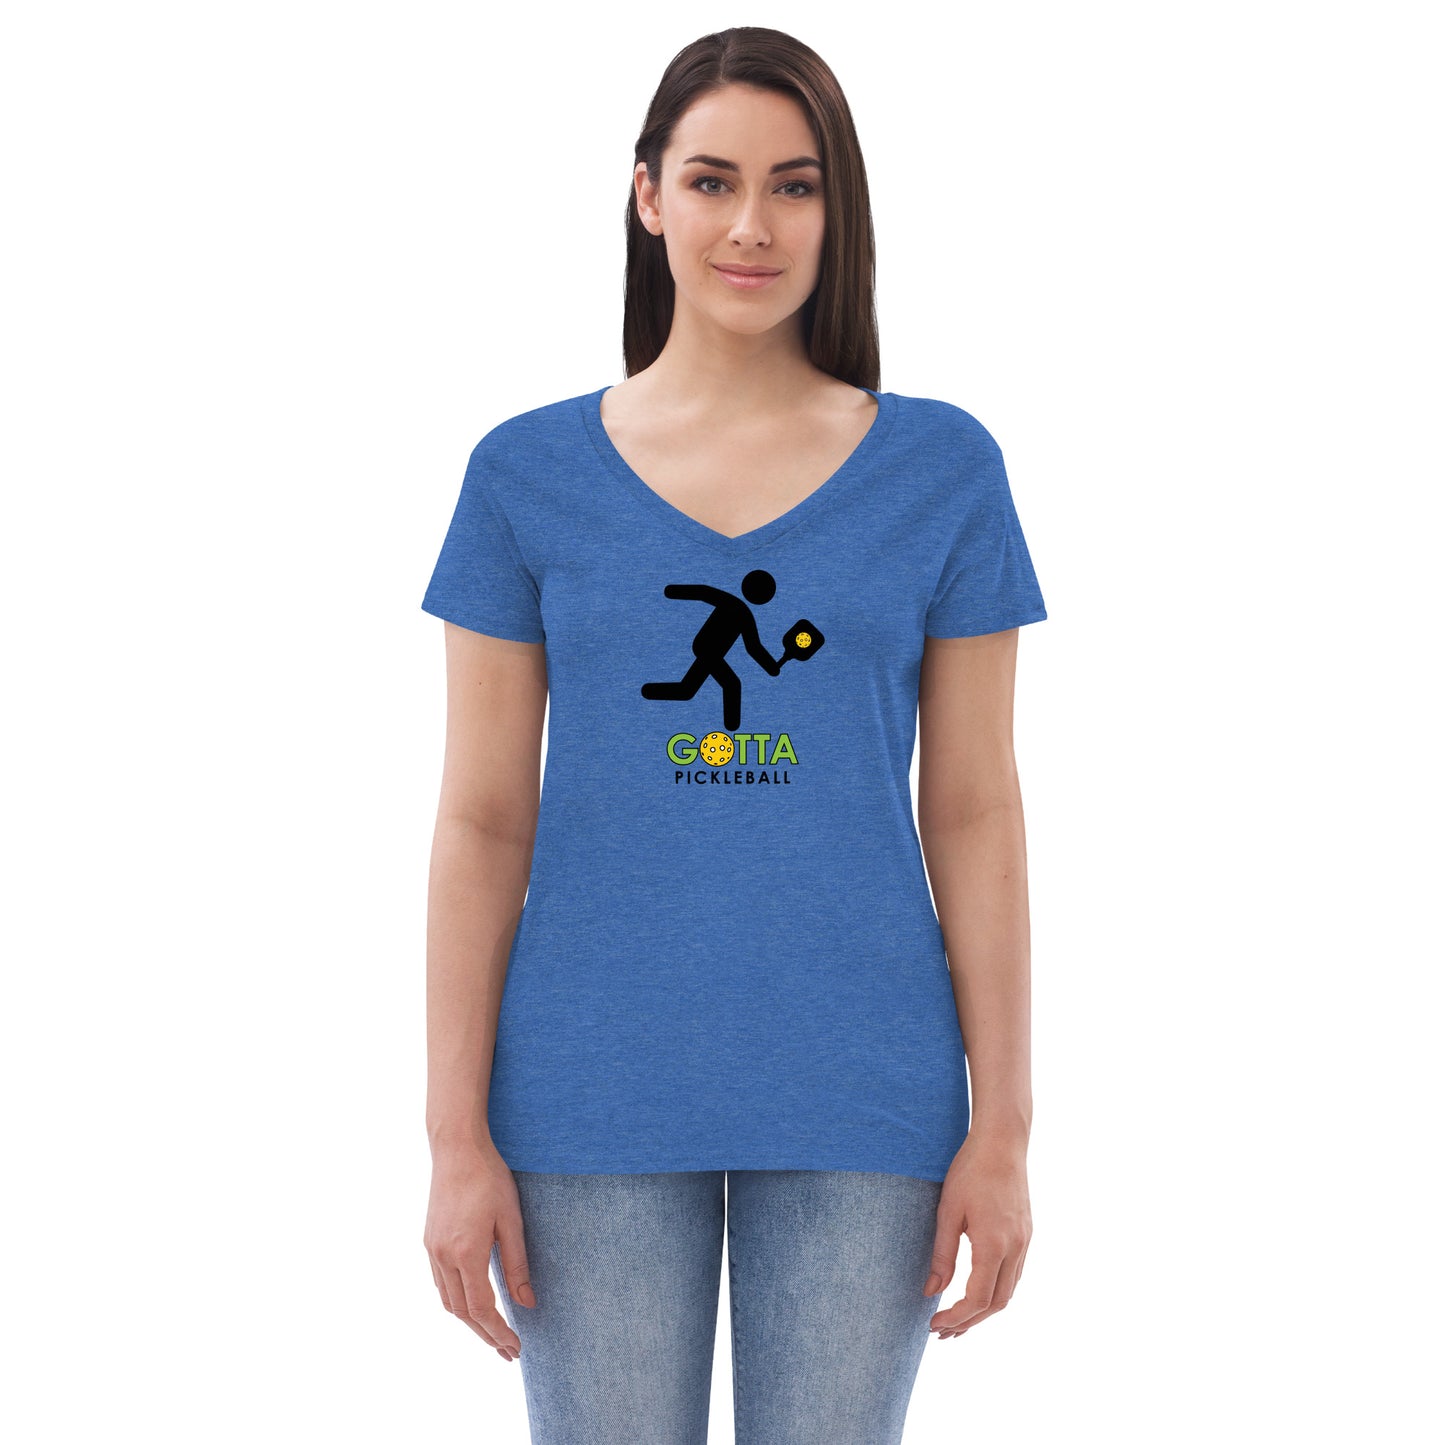 Women's T-Shirt RELAXED FIT: GOTTA PICKLEBALL MASCOT OZZIE V-NECK (more colors)